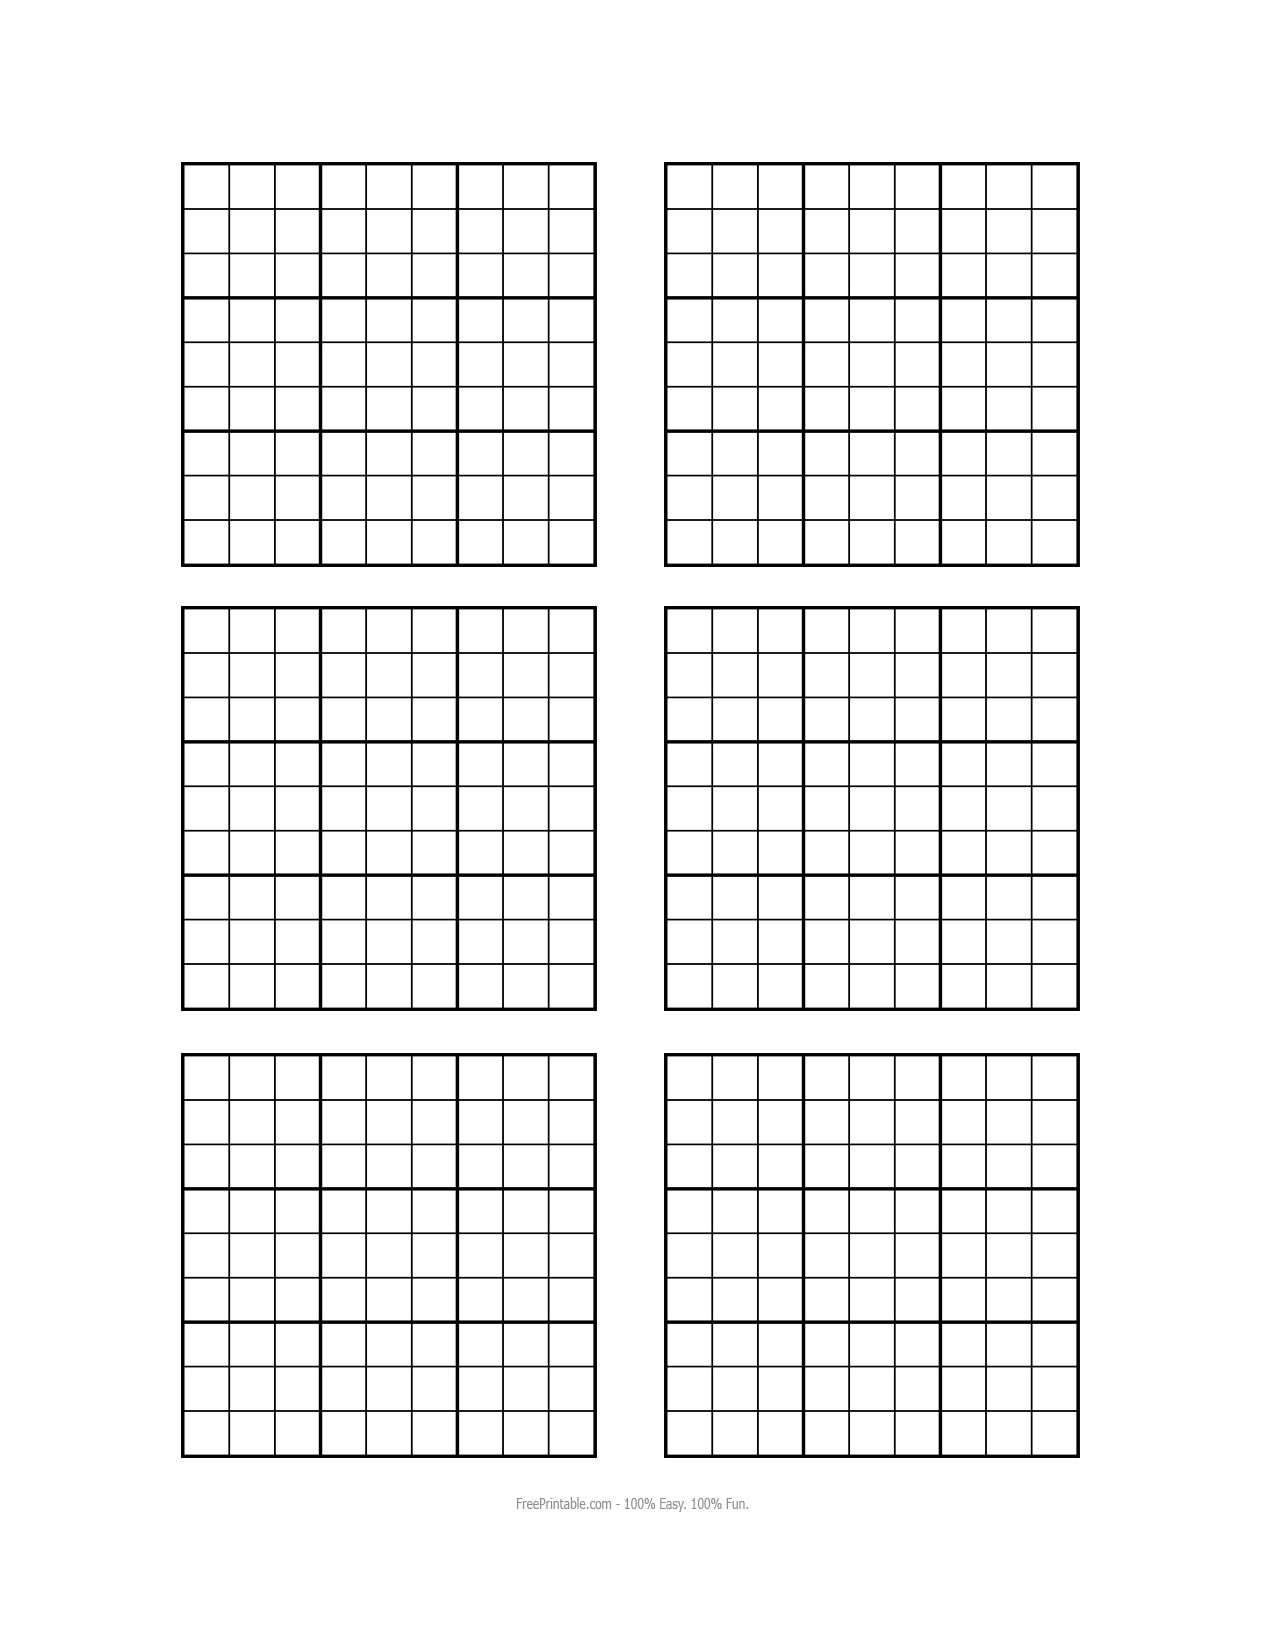 sudoku-printable-blank-grids-sudoku-puzzles-printable